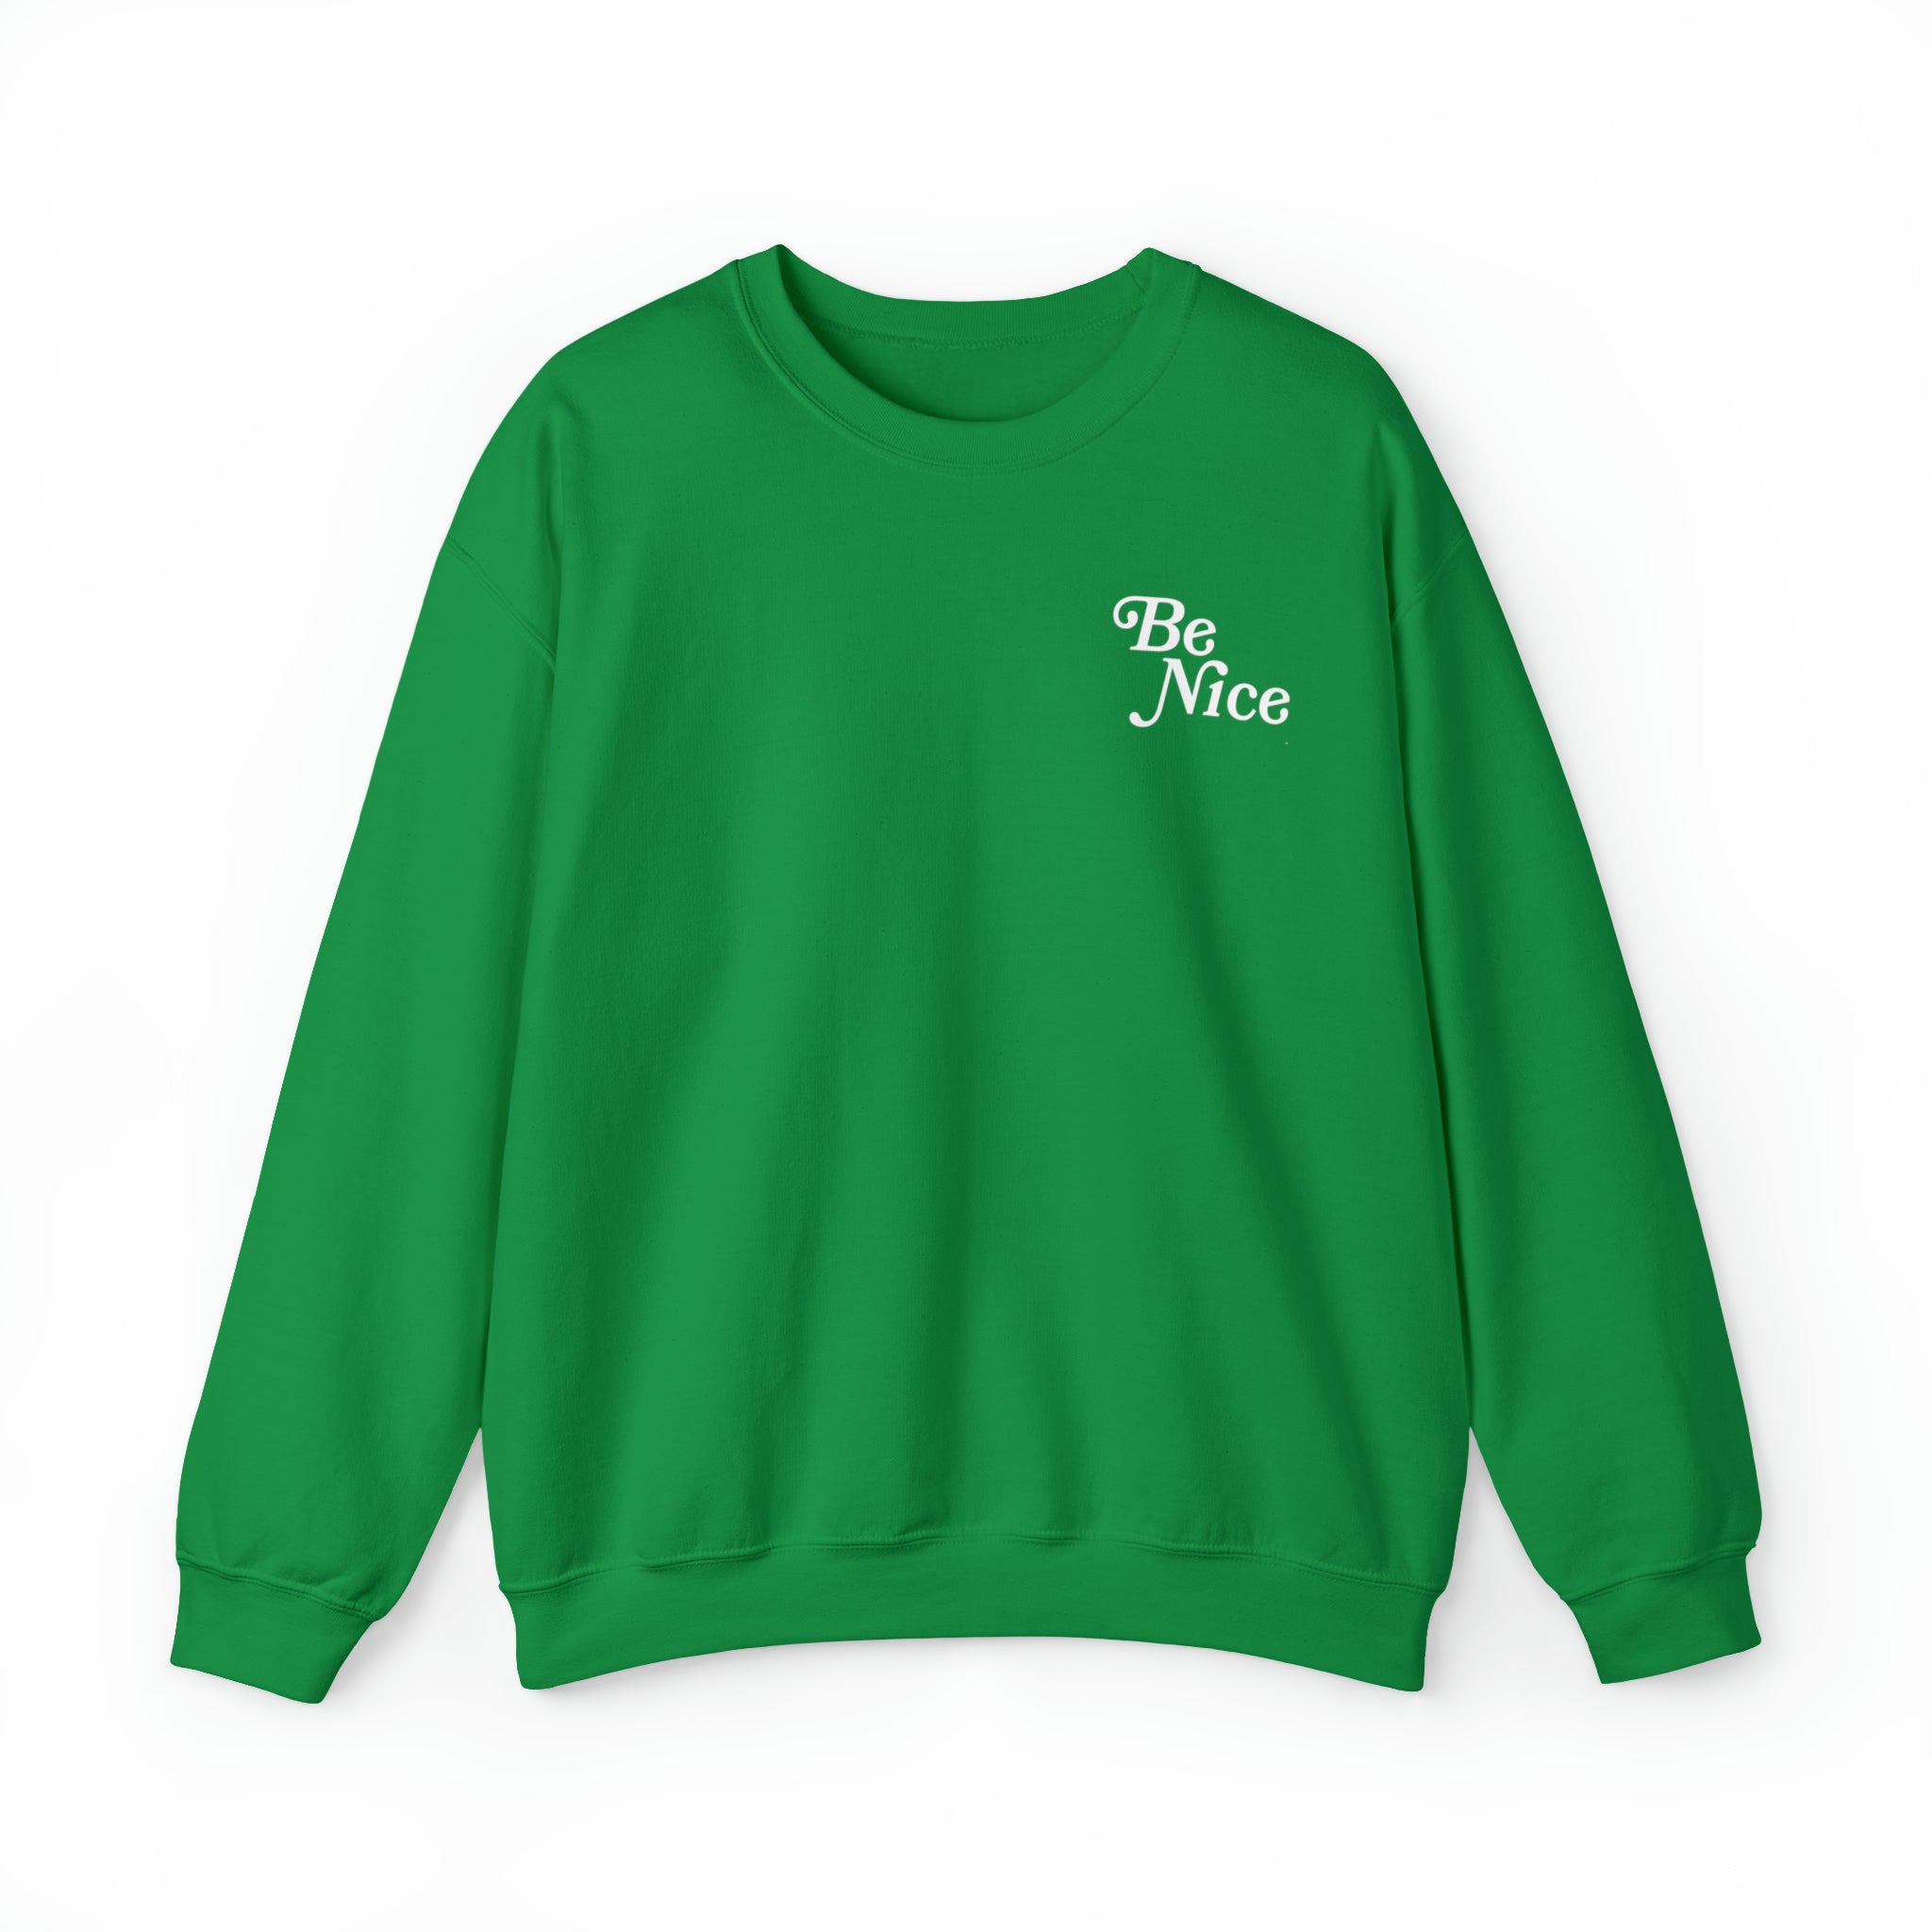 Be Nice or Kick Rocks message on dark-colored comfy crewneck sweatshirt